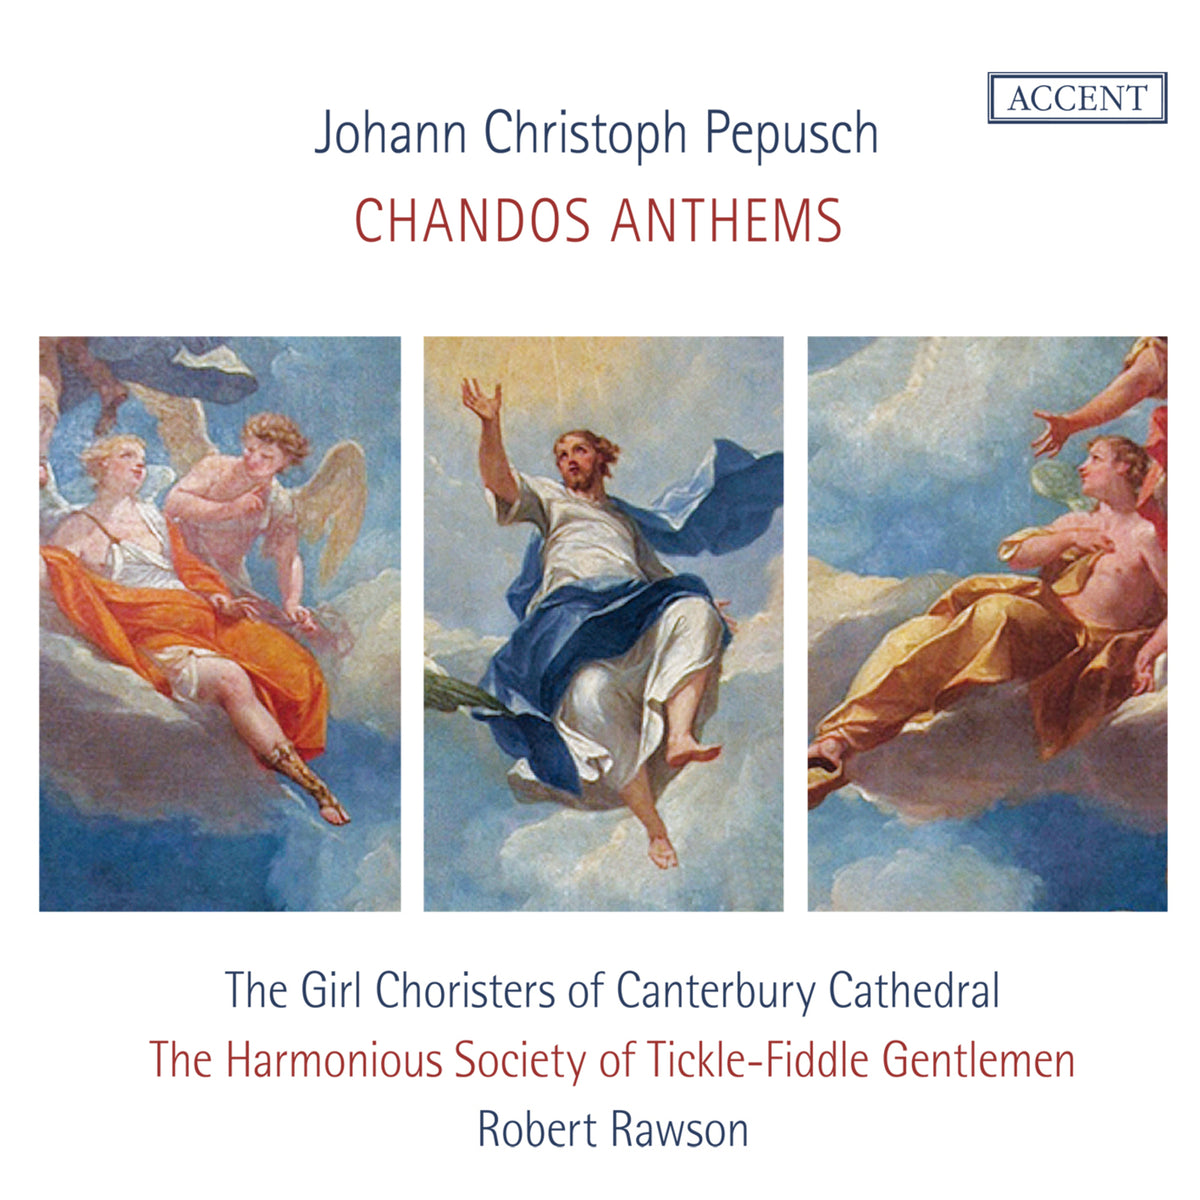 The Harmonious Society of Tickle-Fiddle Gentlemen - Johann Christoph Pepusch: Chandos Anthems - ACC24397